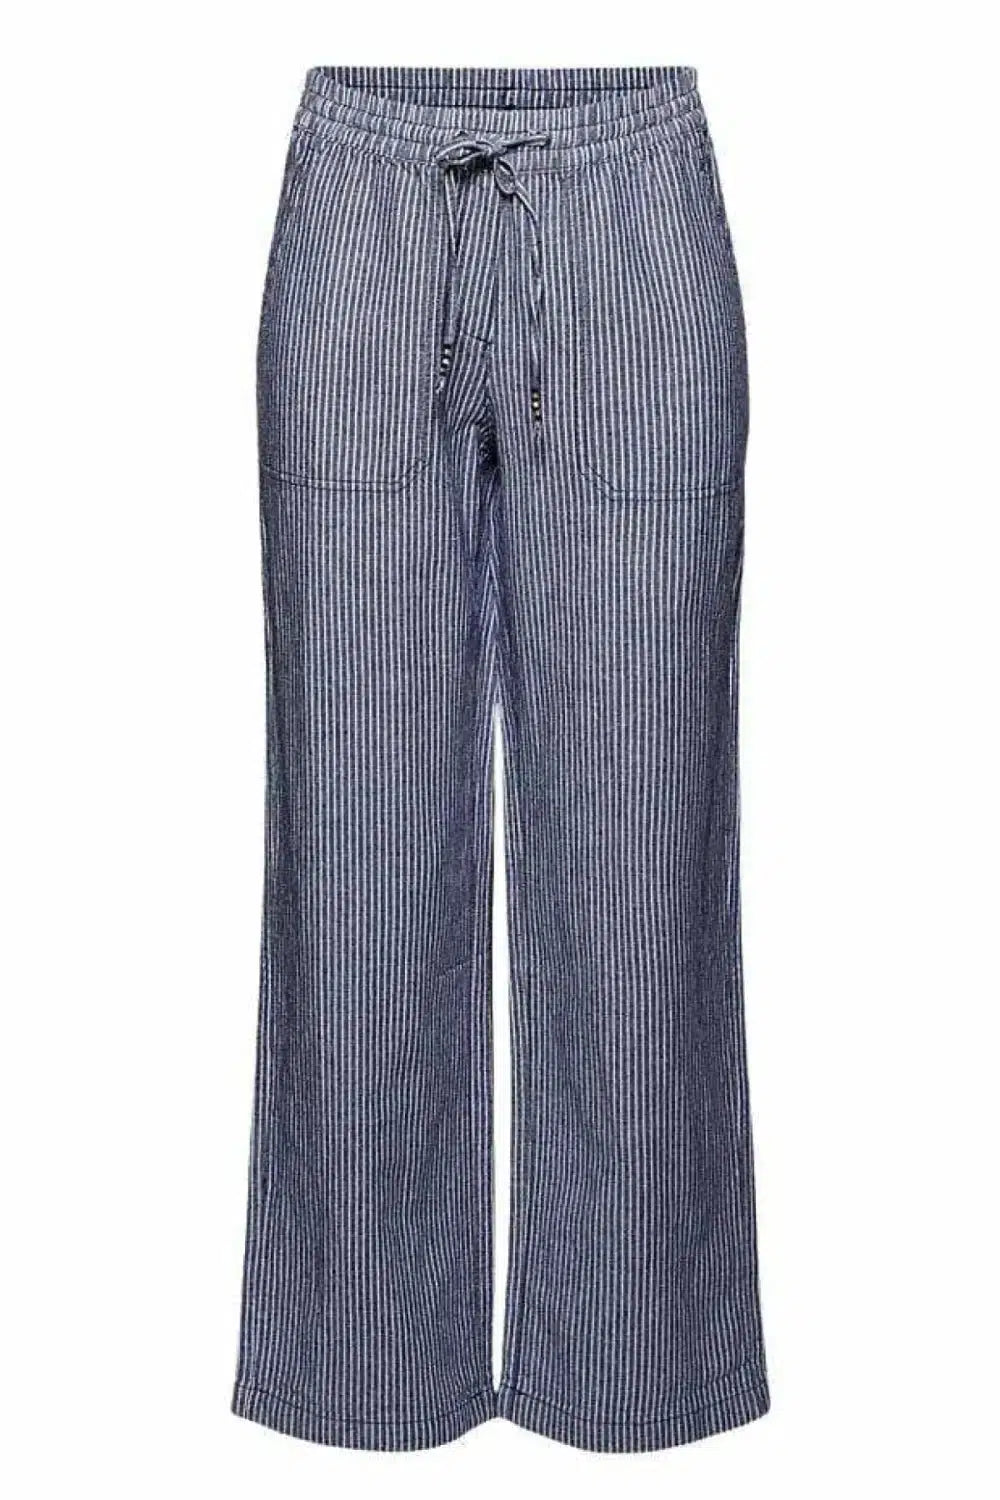 Esprit Striped Casual Linen Trousers